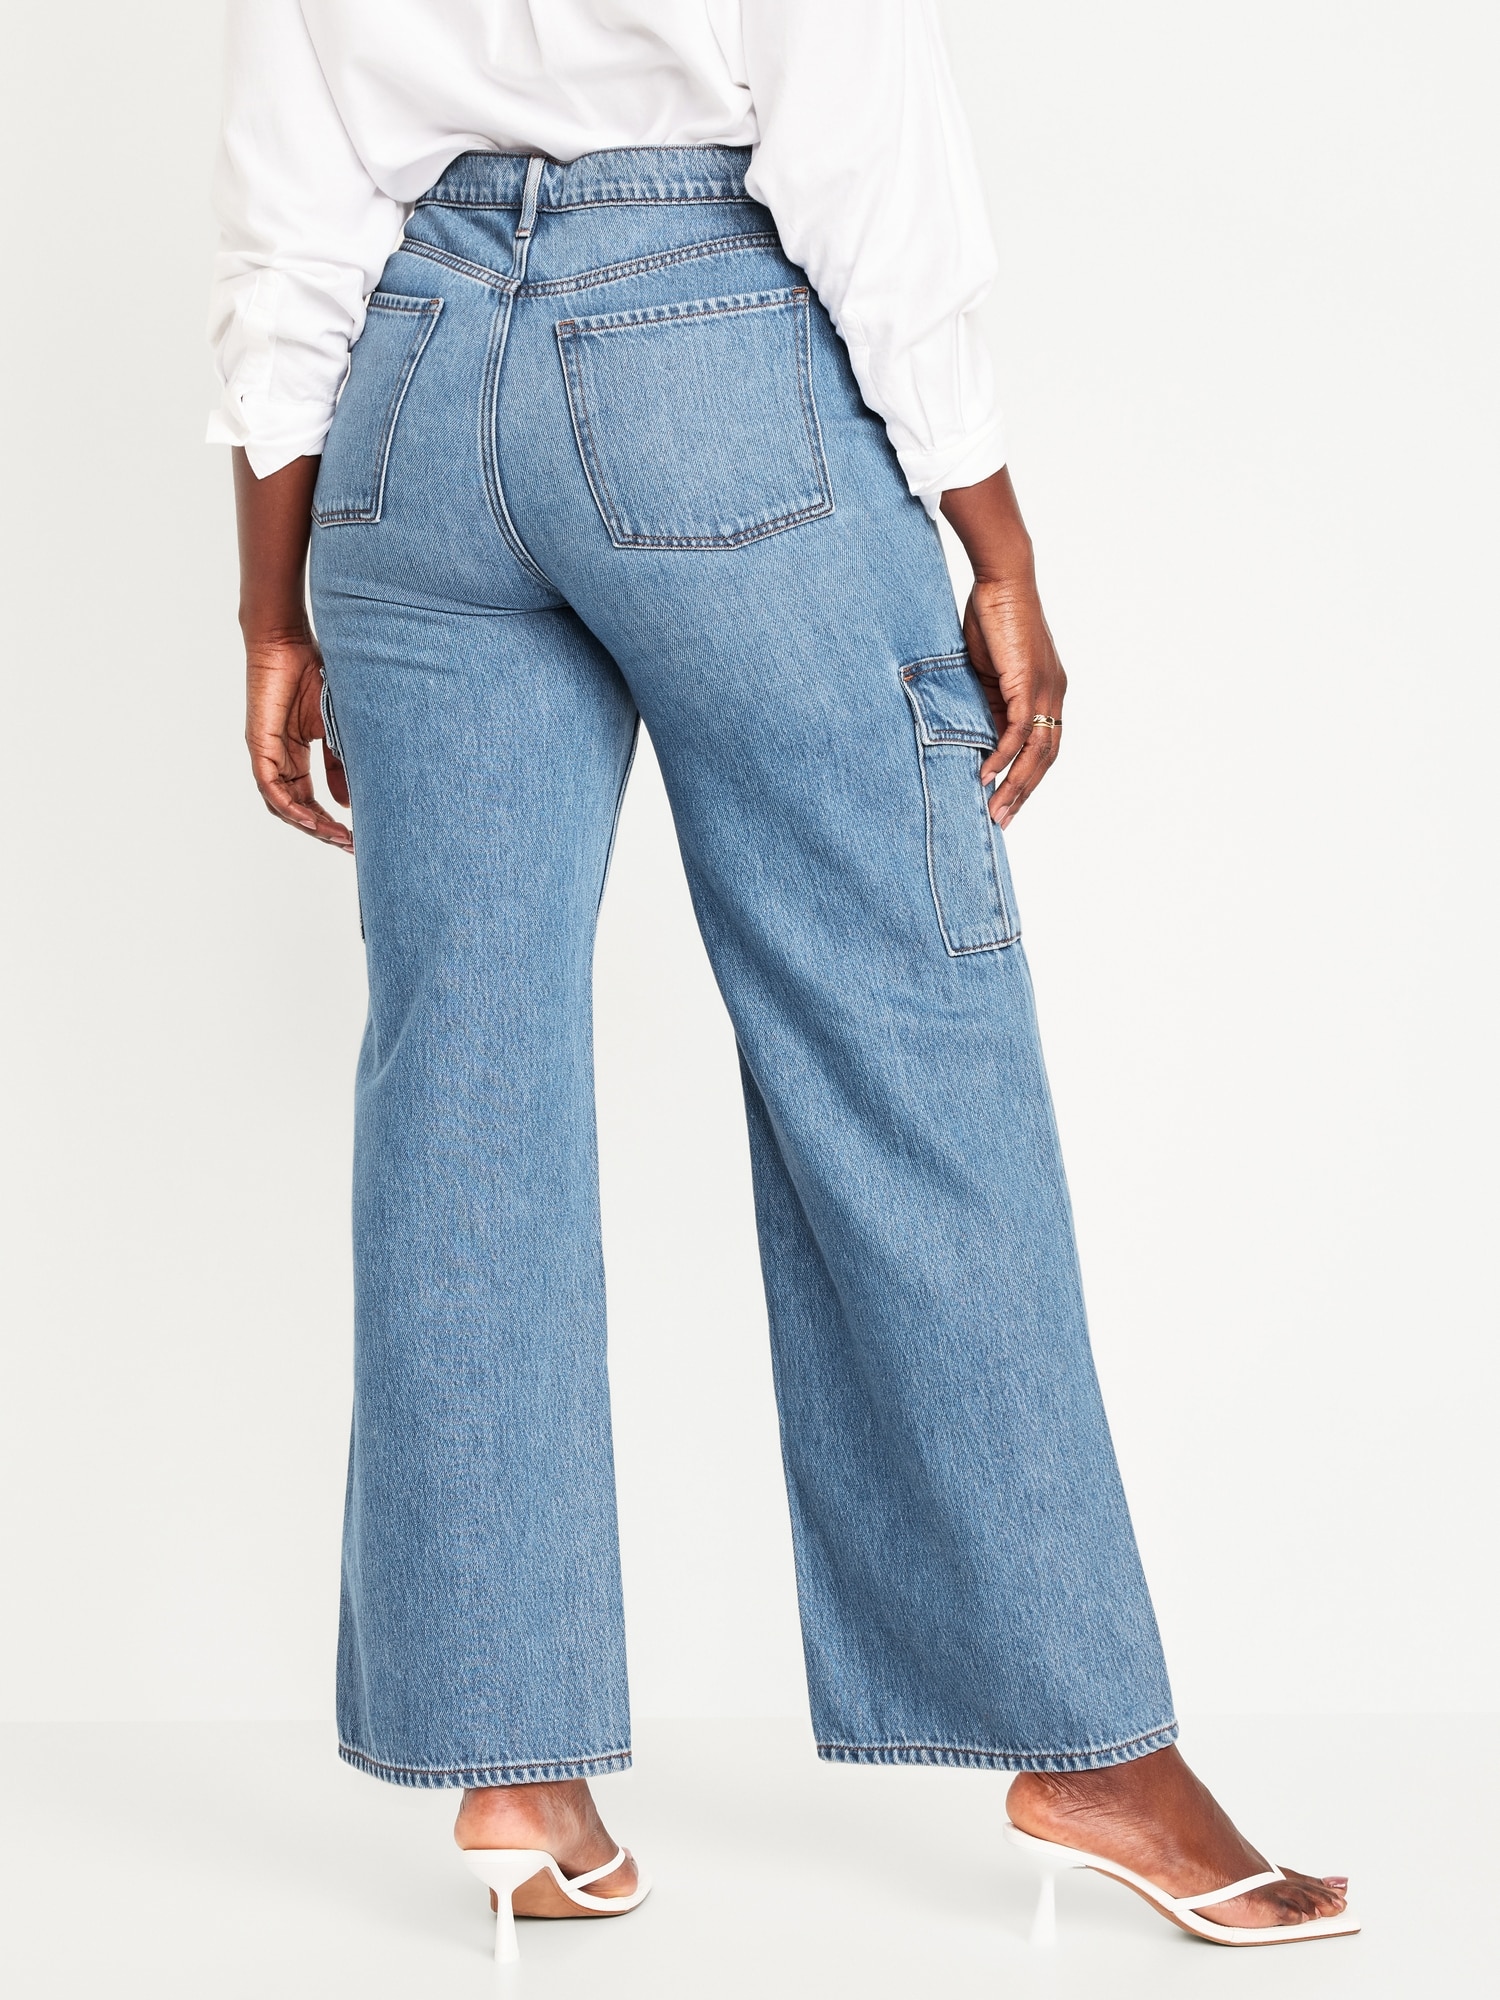 Cargo Pants Women, Bell Bottom Jeans for Women, High Waisted Denim